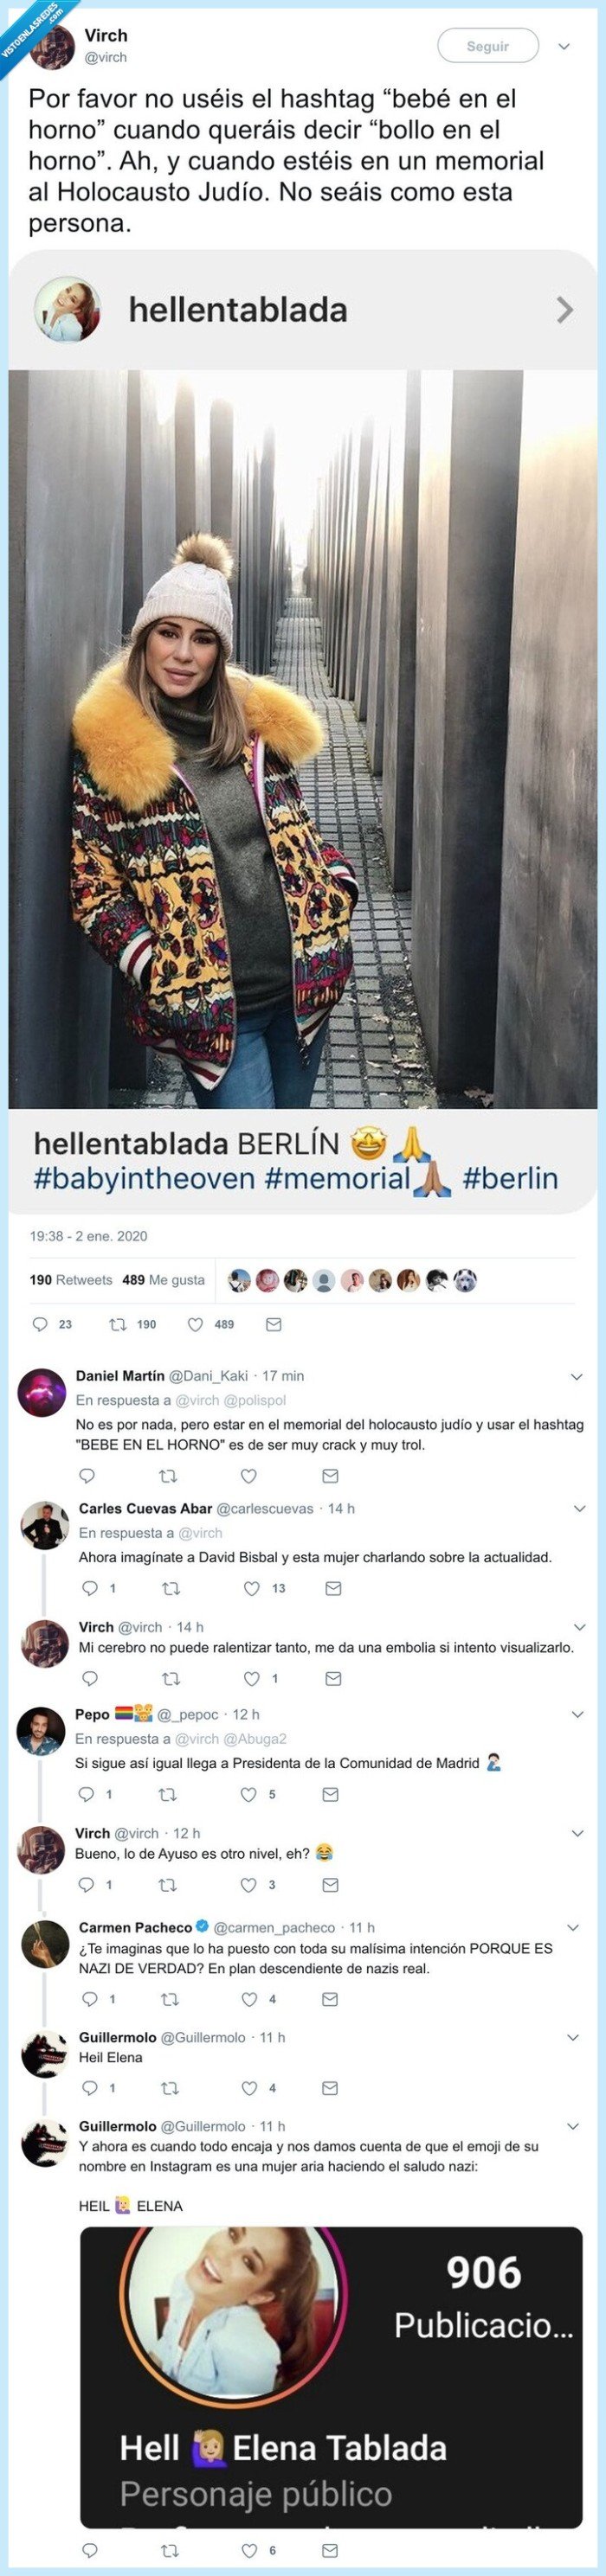 elena tablada,baby in the oven,horno,fail,holocausto judío,memorial